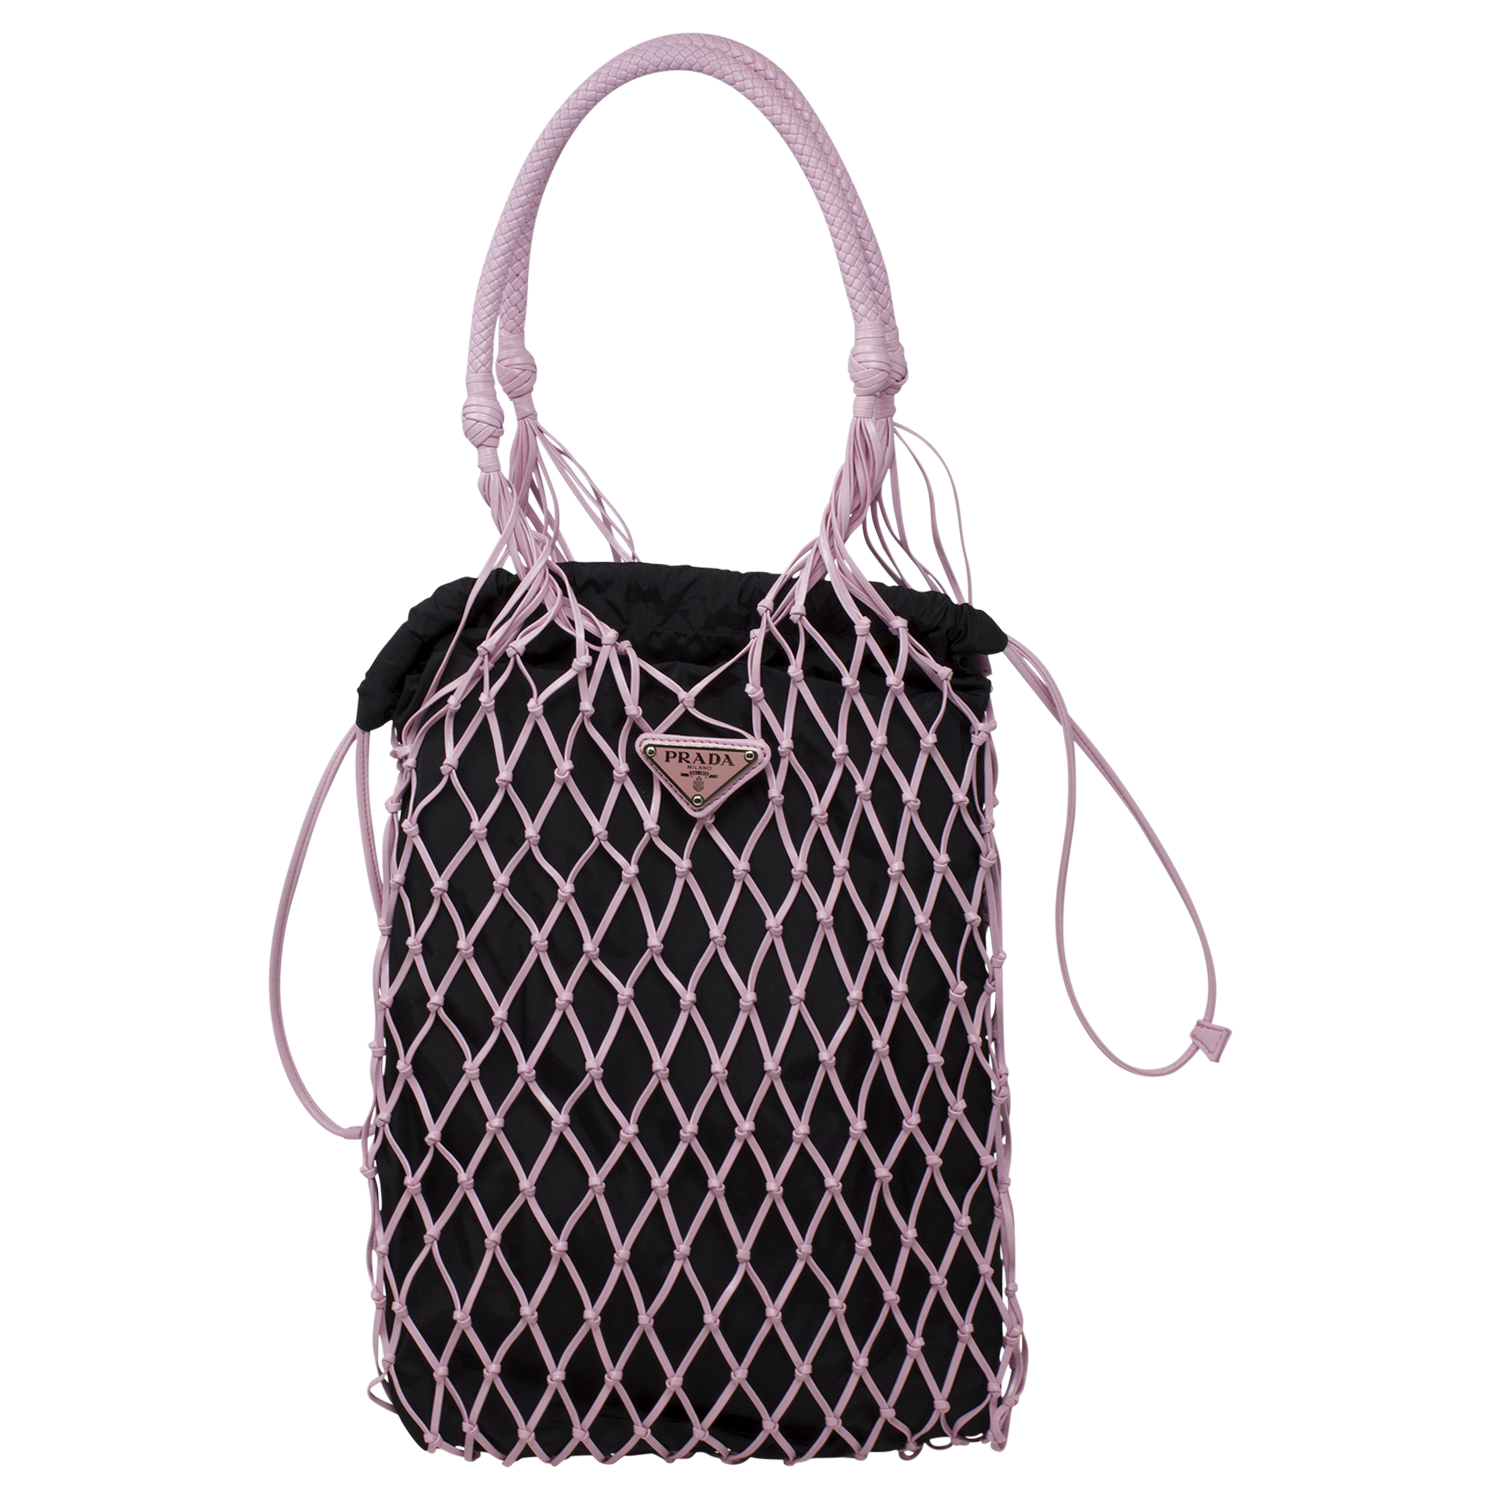 Prada Limited Edition Pink Leather Net Bag